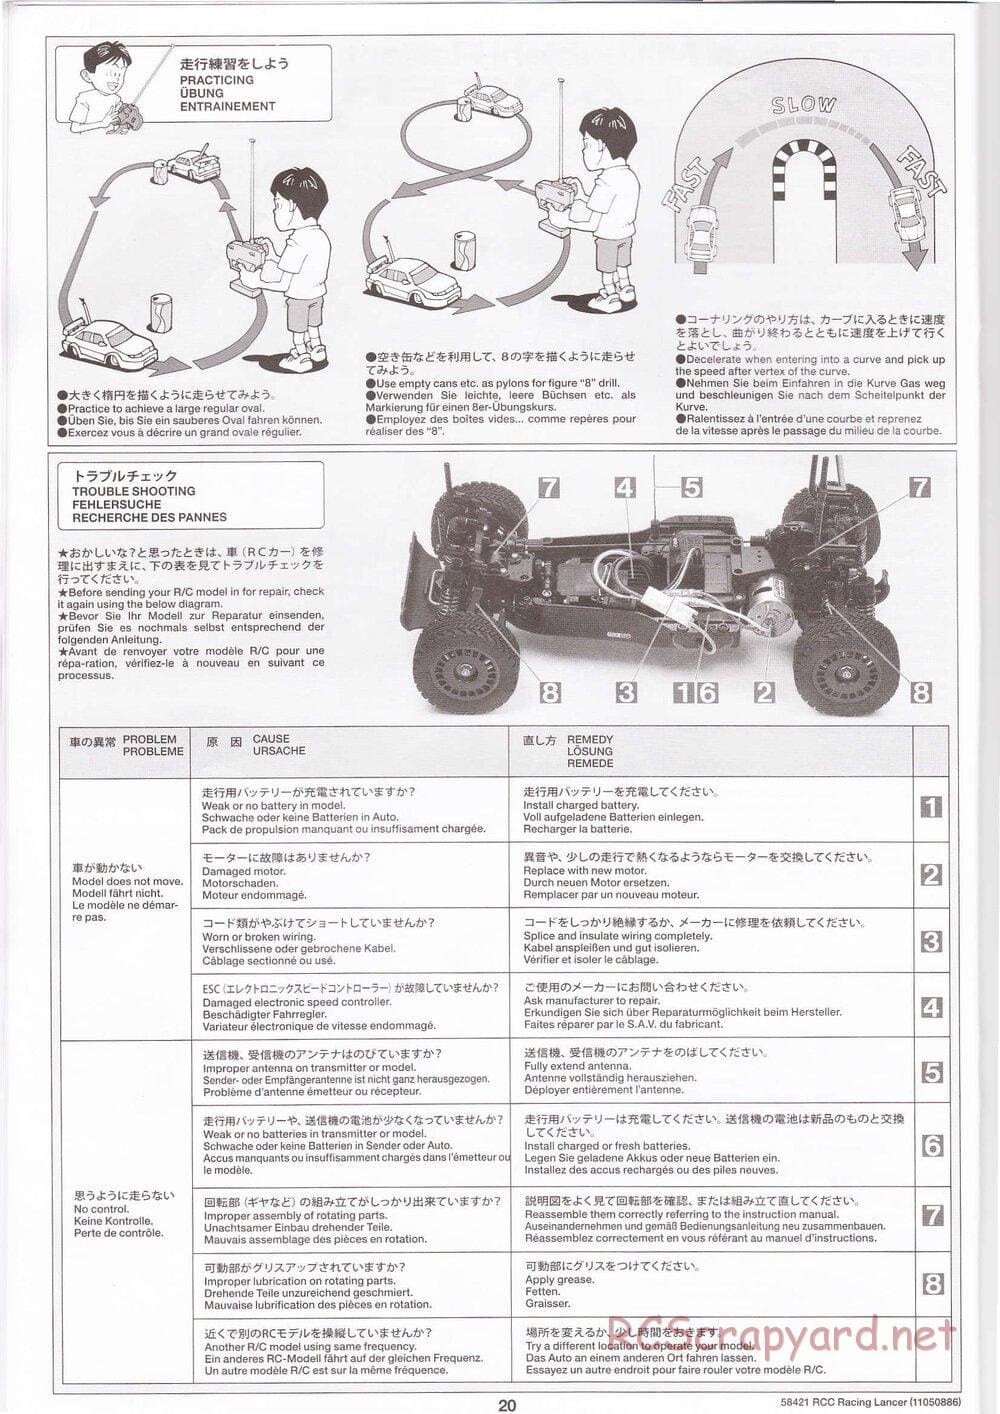 Tamiya - Mitsubishi Racing Lancer - DF-01 Chassis - Manual - Page 20